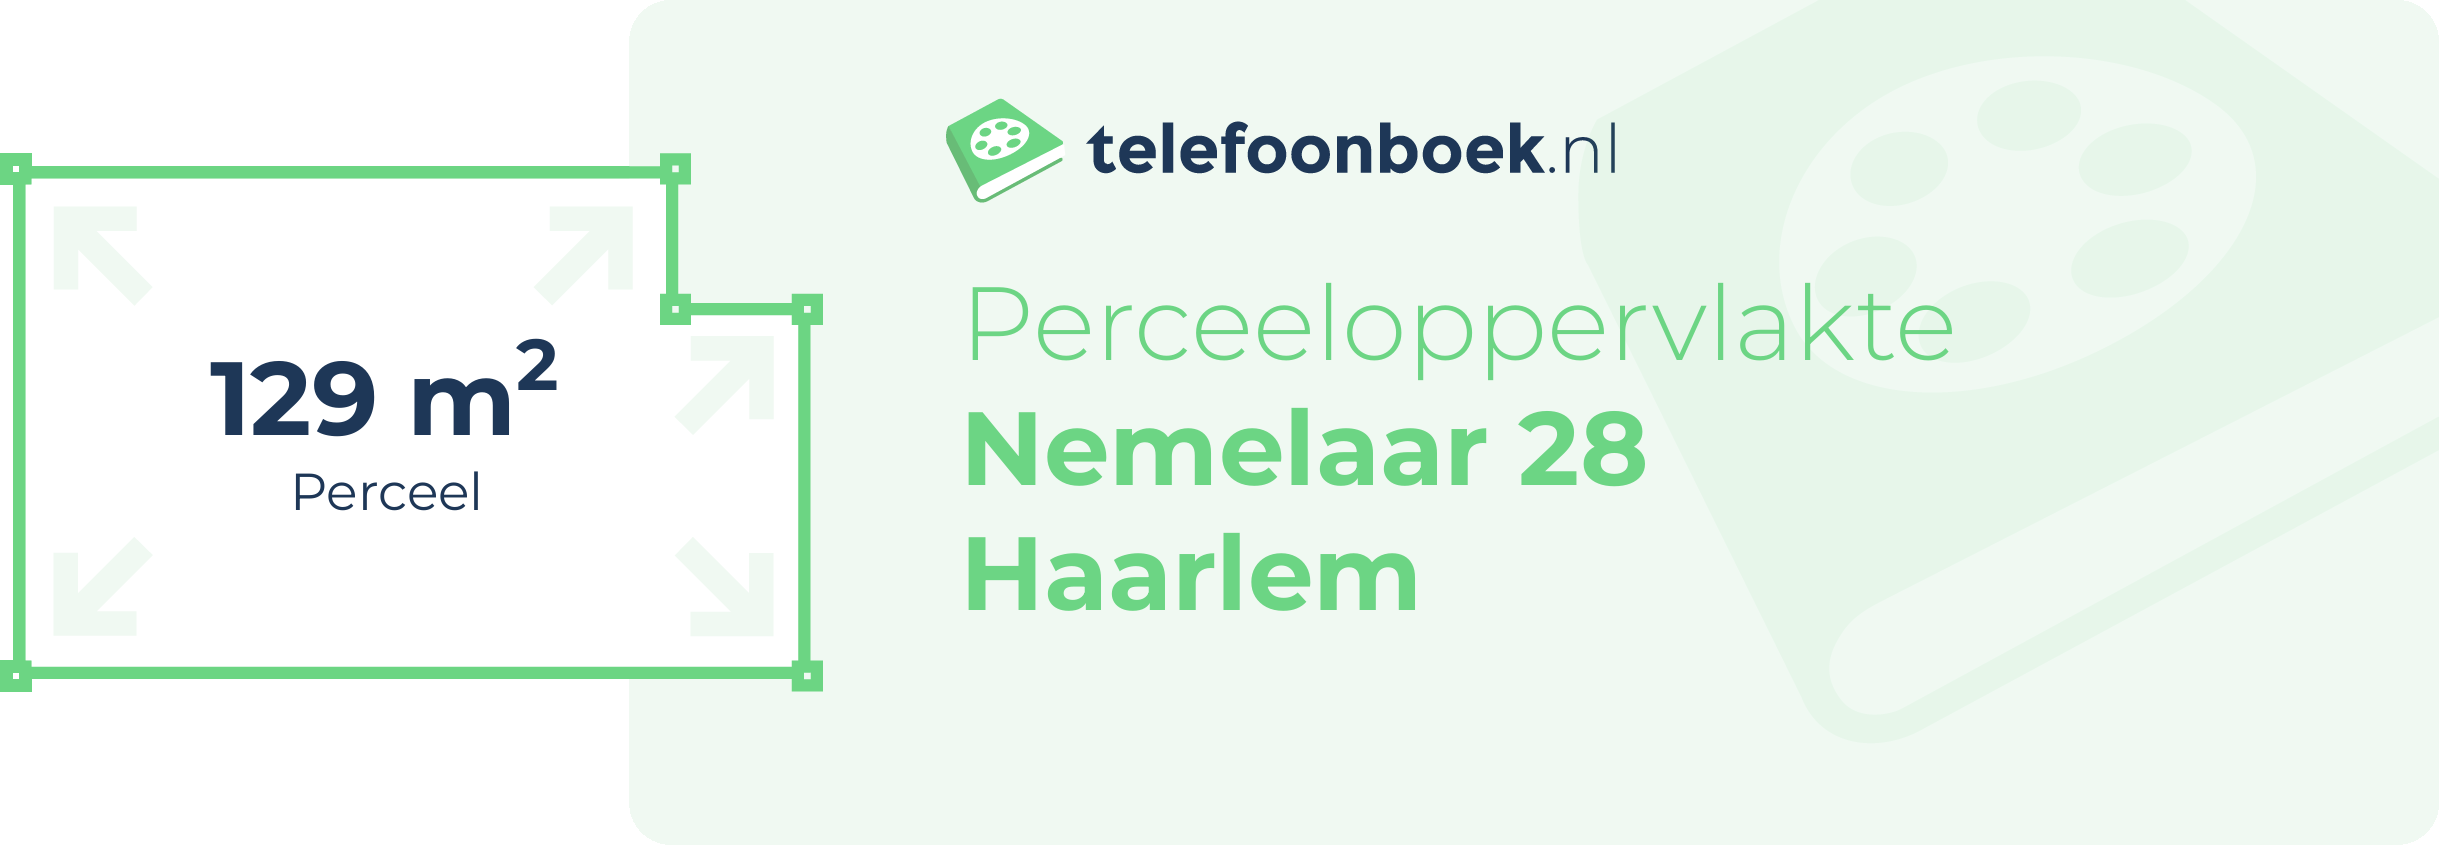 Perceeloppervlakte Nemelaar 28 Haarlem